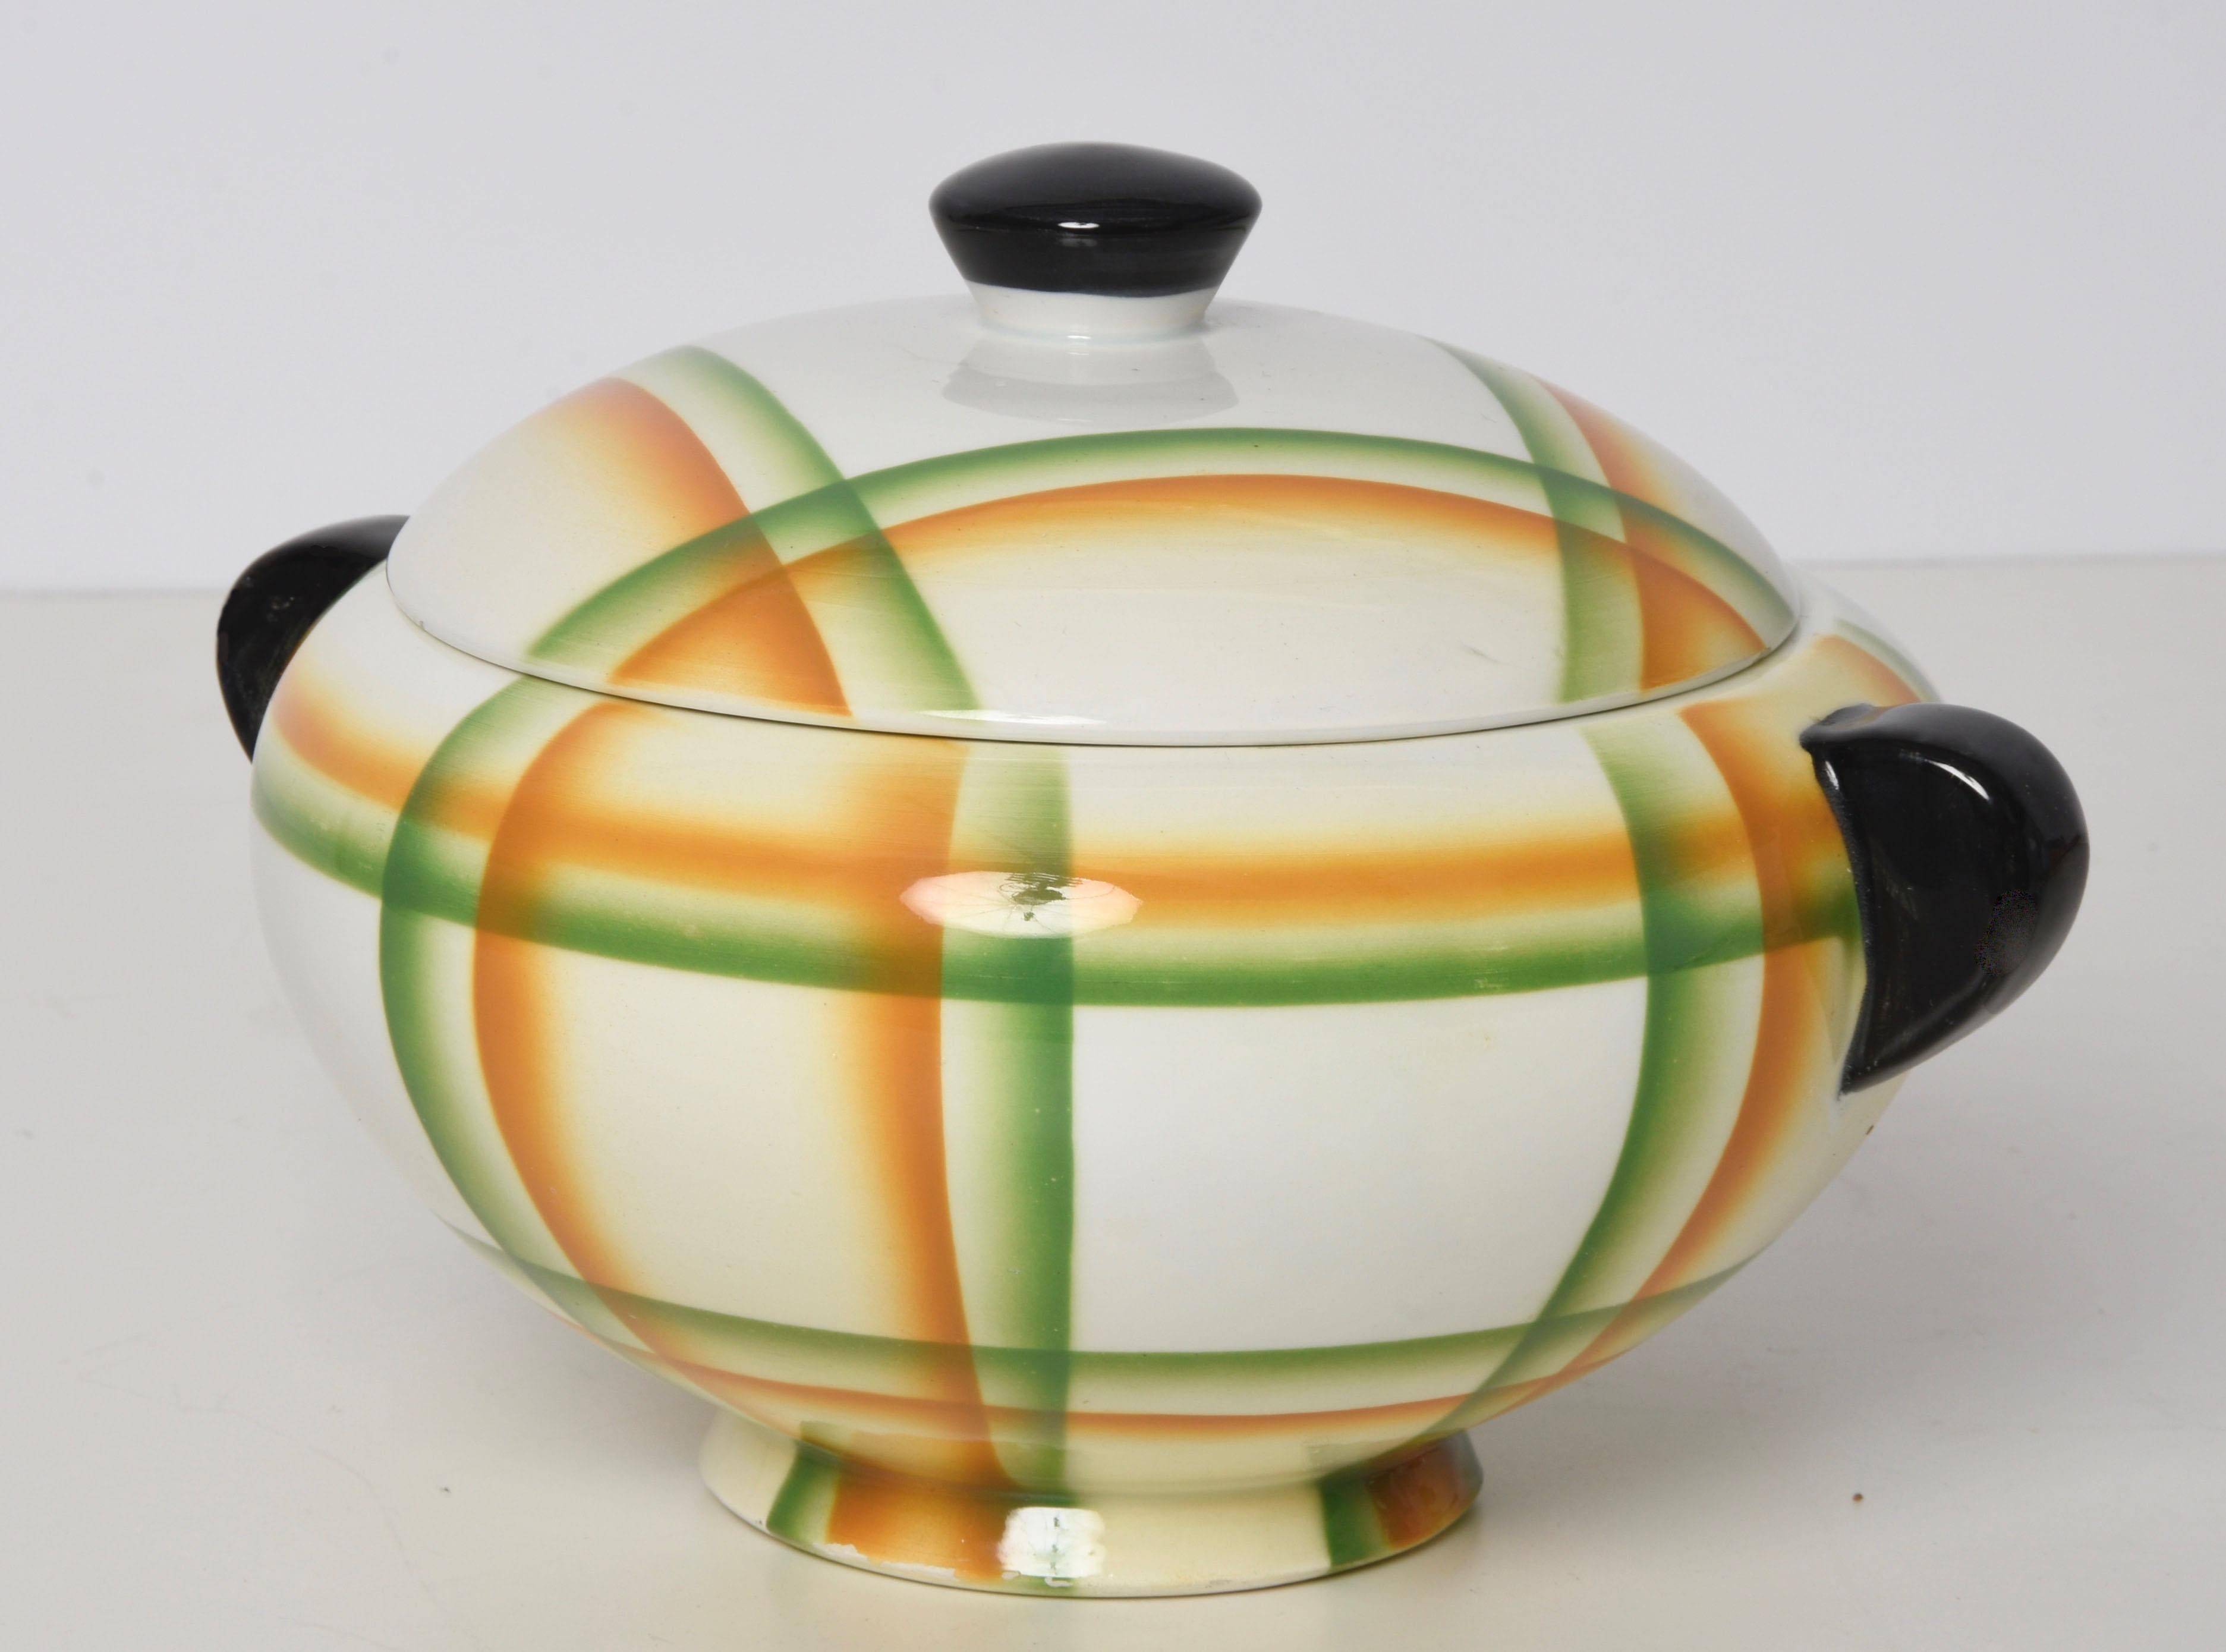 Art Deco Simonetto Futuristic Airbrushed Ceramic Italian Centerpiece Soup Bowl, 1930s For Sale